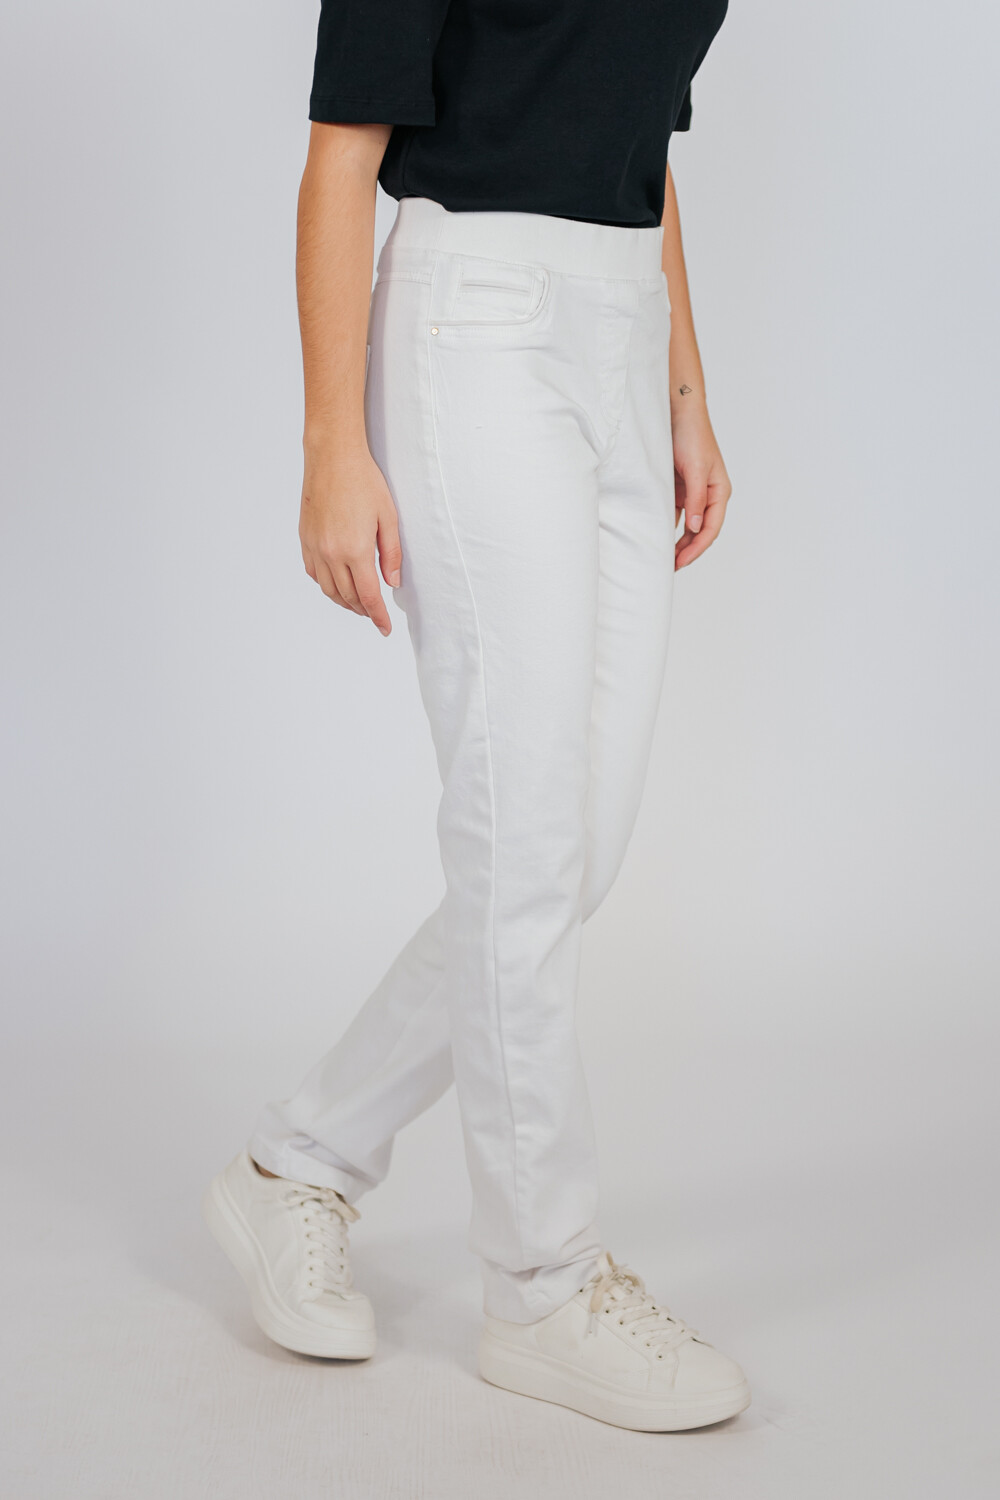 Pantalon Nyala 0203 Blanco